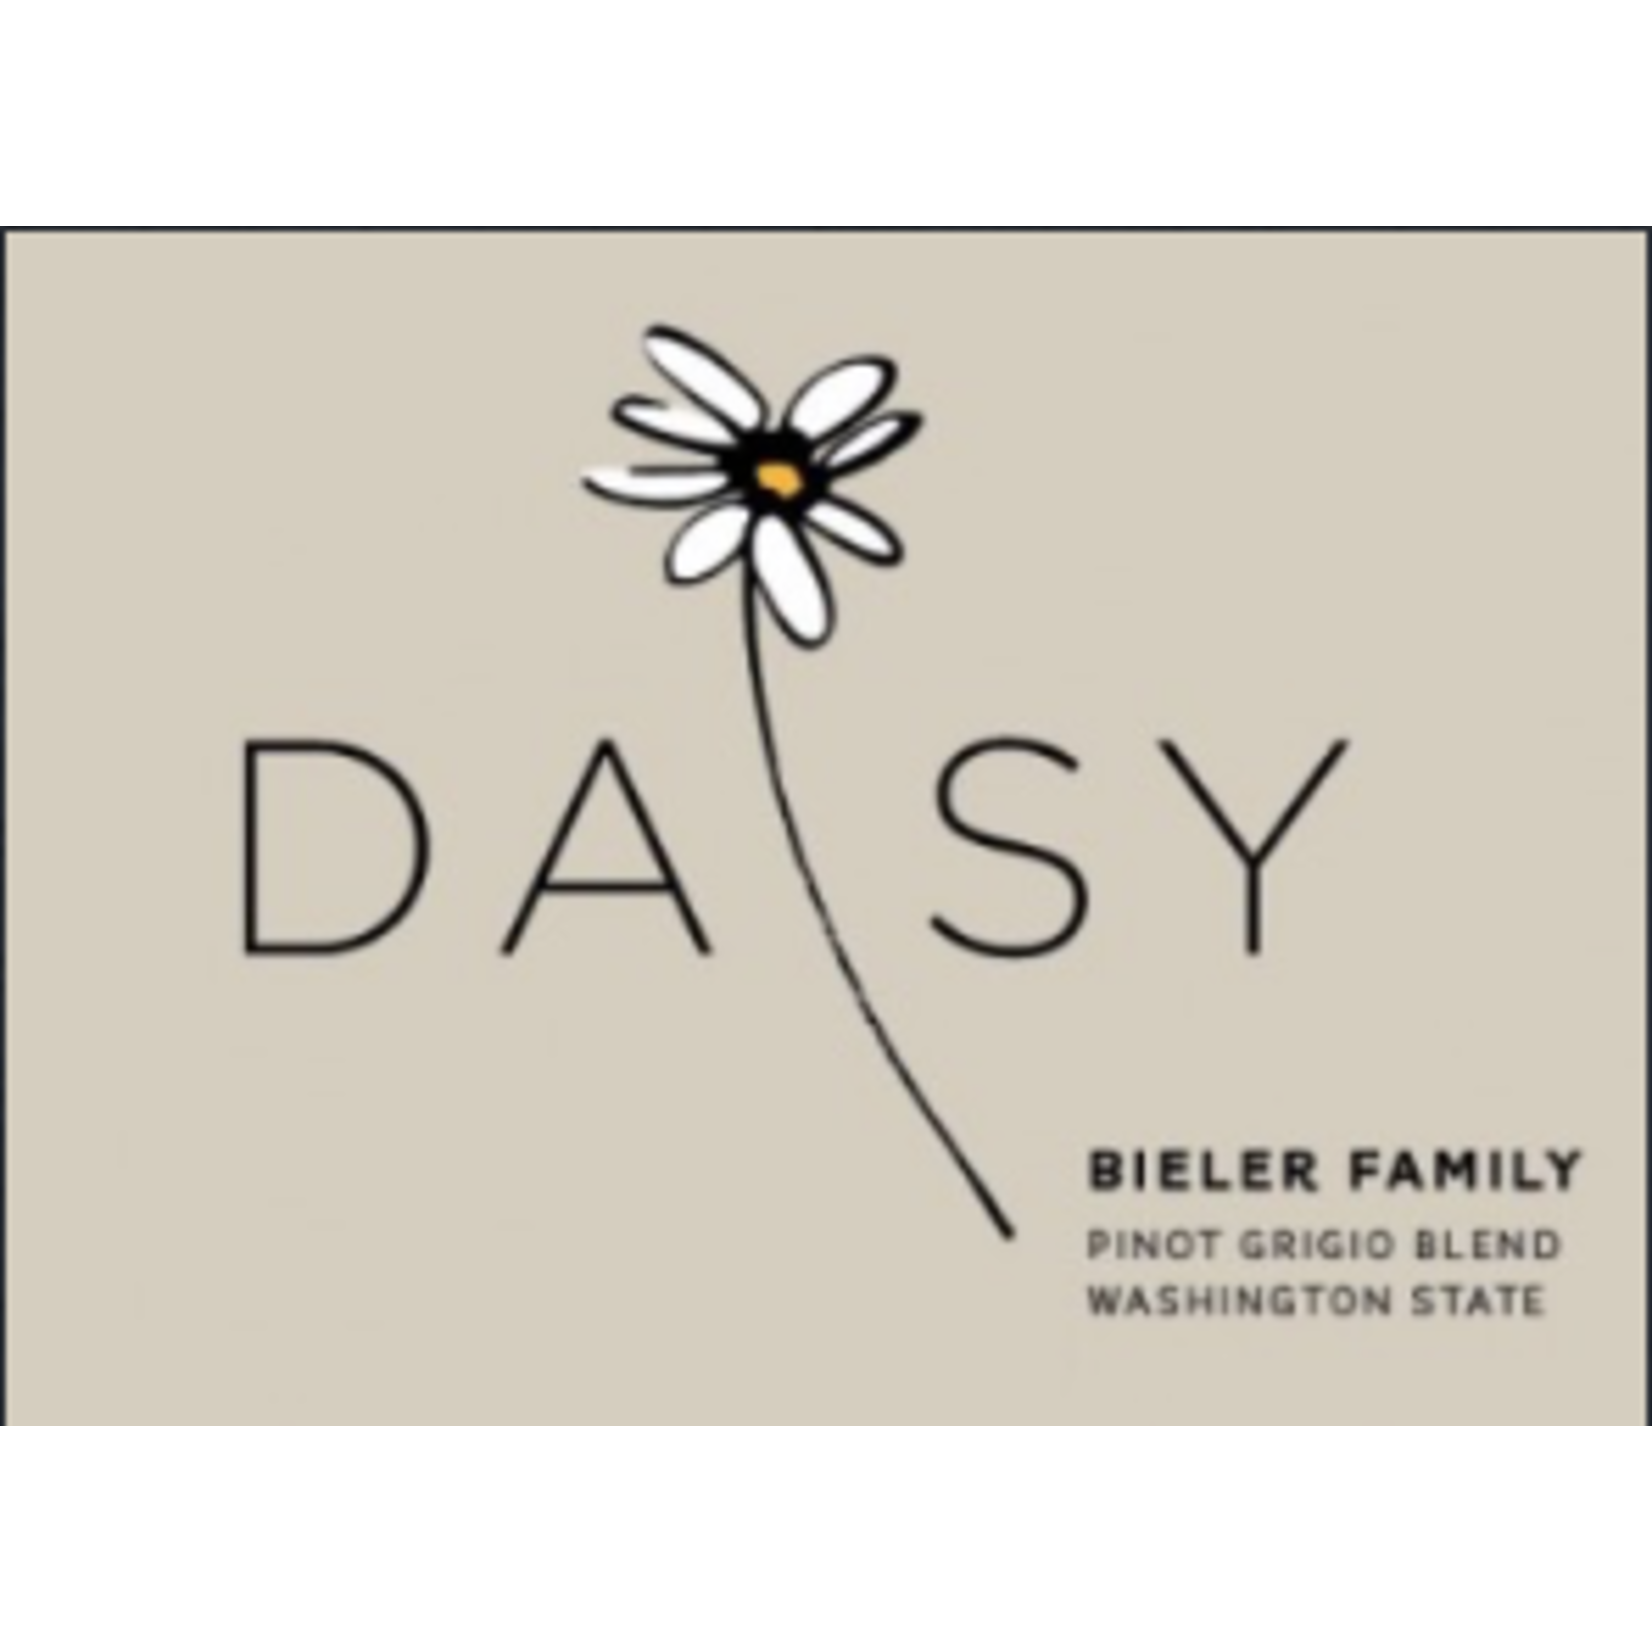 Bielere Family Bieler Family Daisy Pinot Grigio Blend 2021 Columbia Valley, Washington